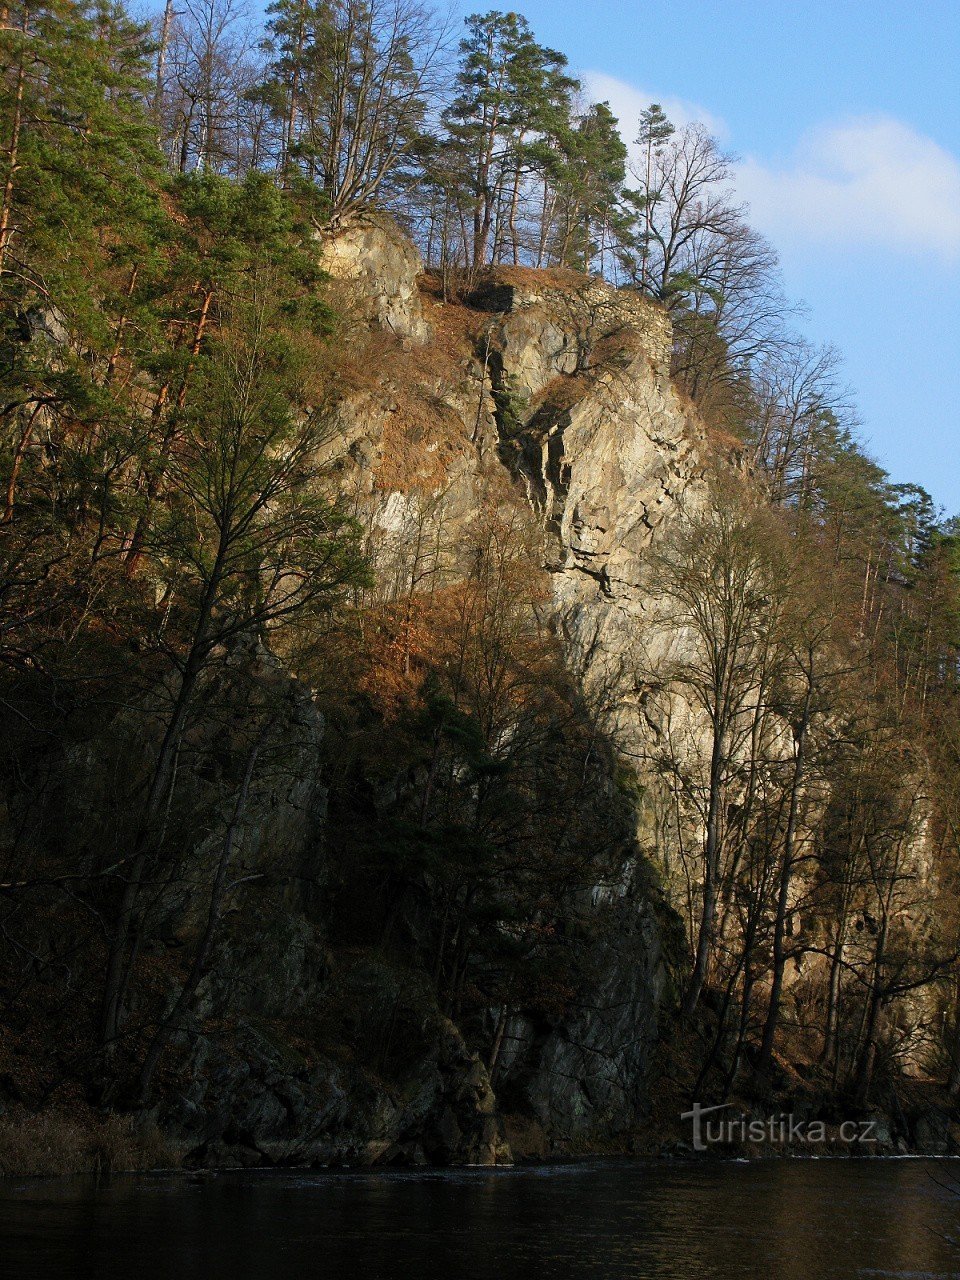 The ruins of the Kotek castle